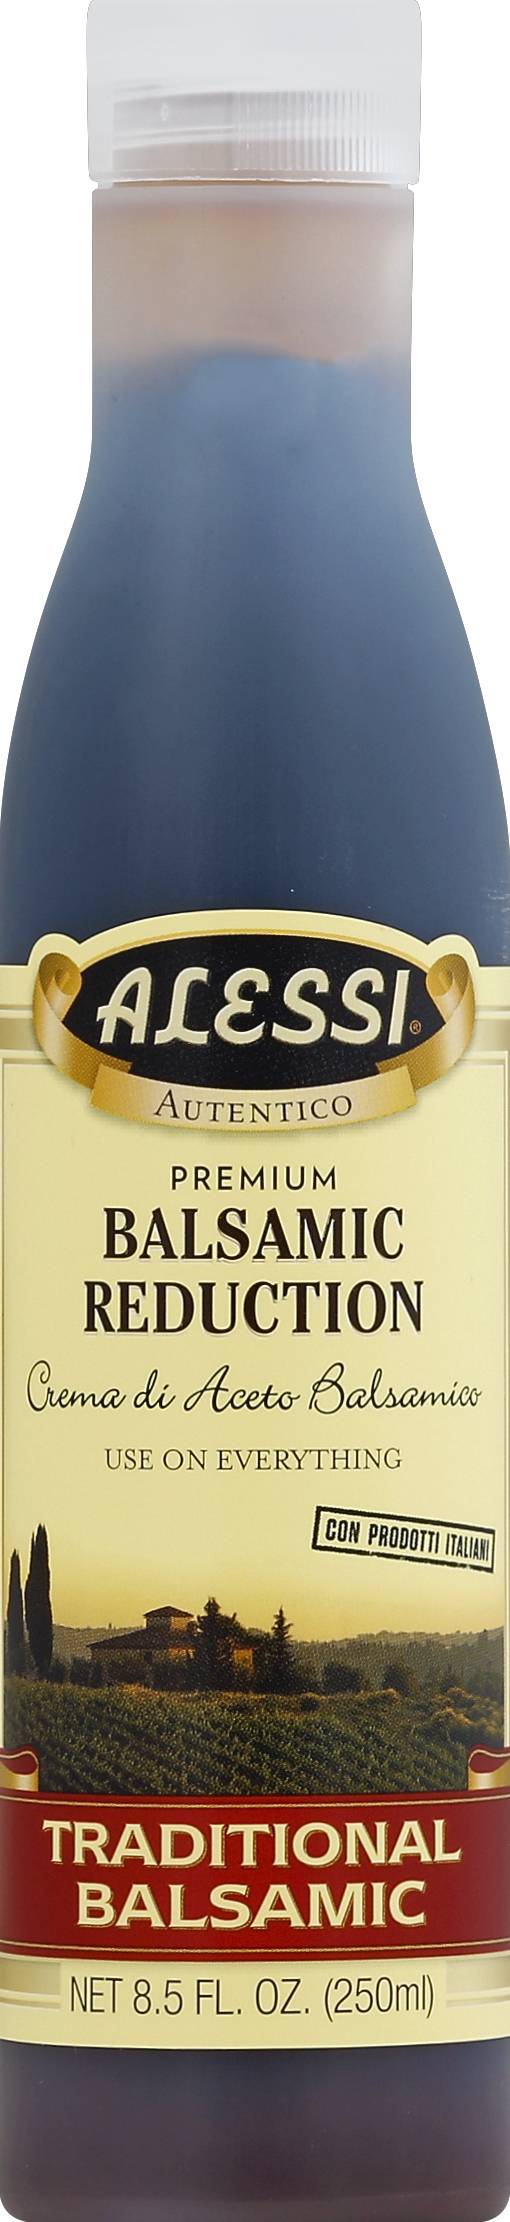 Alessi Premium Traditional Balsamic Reduction